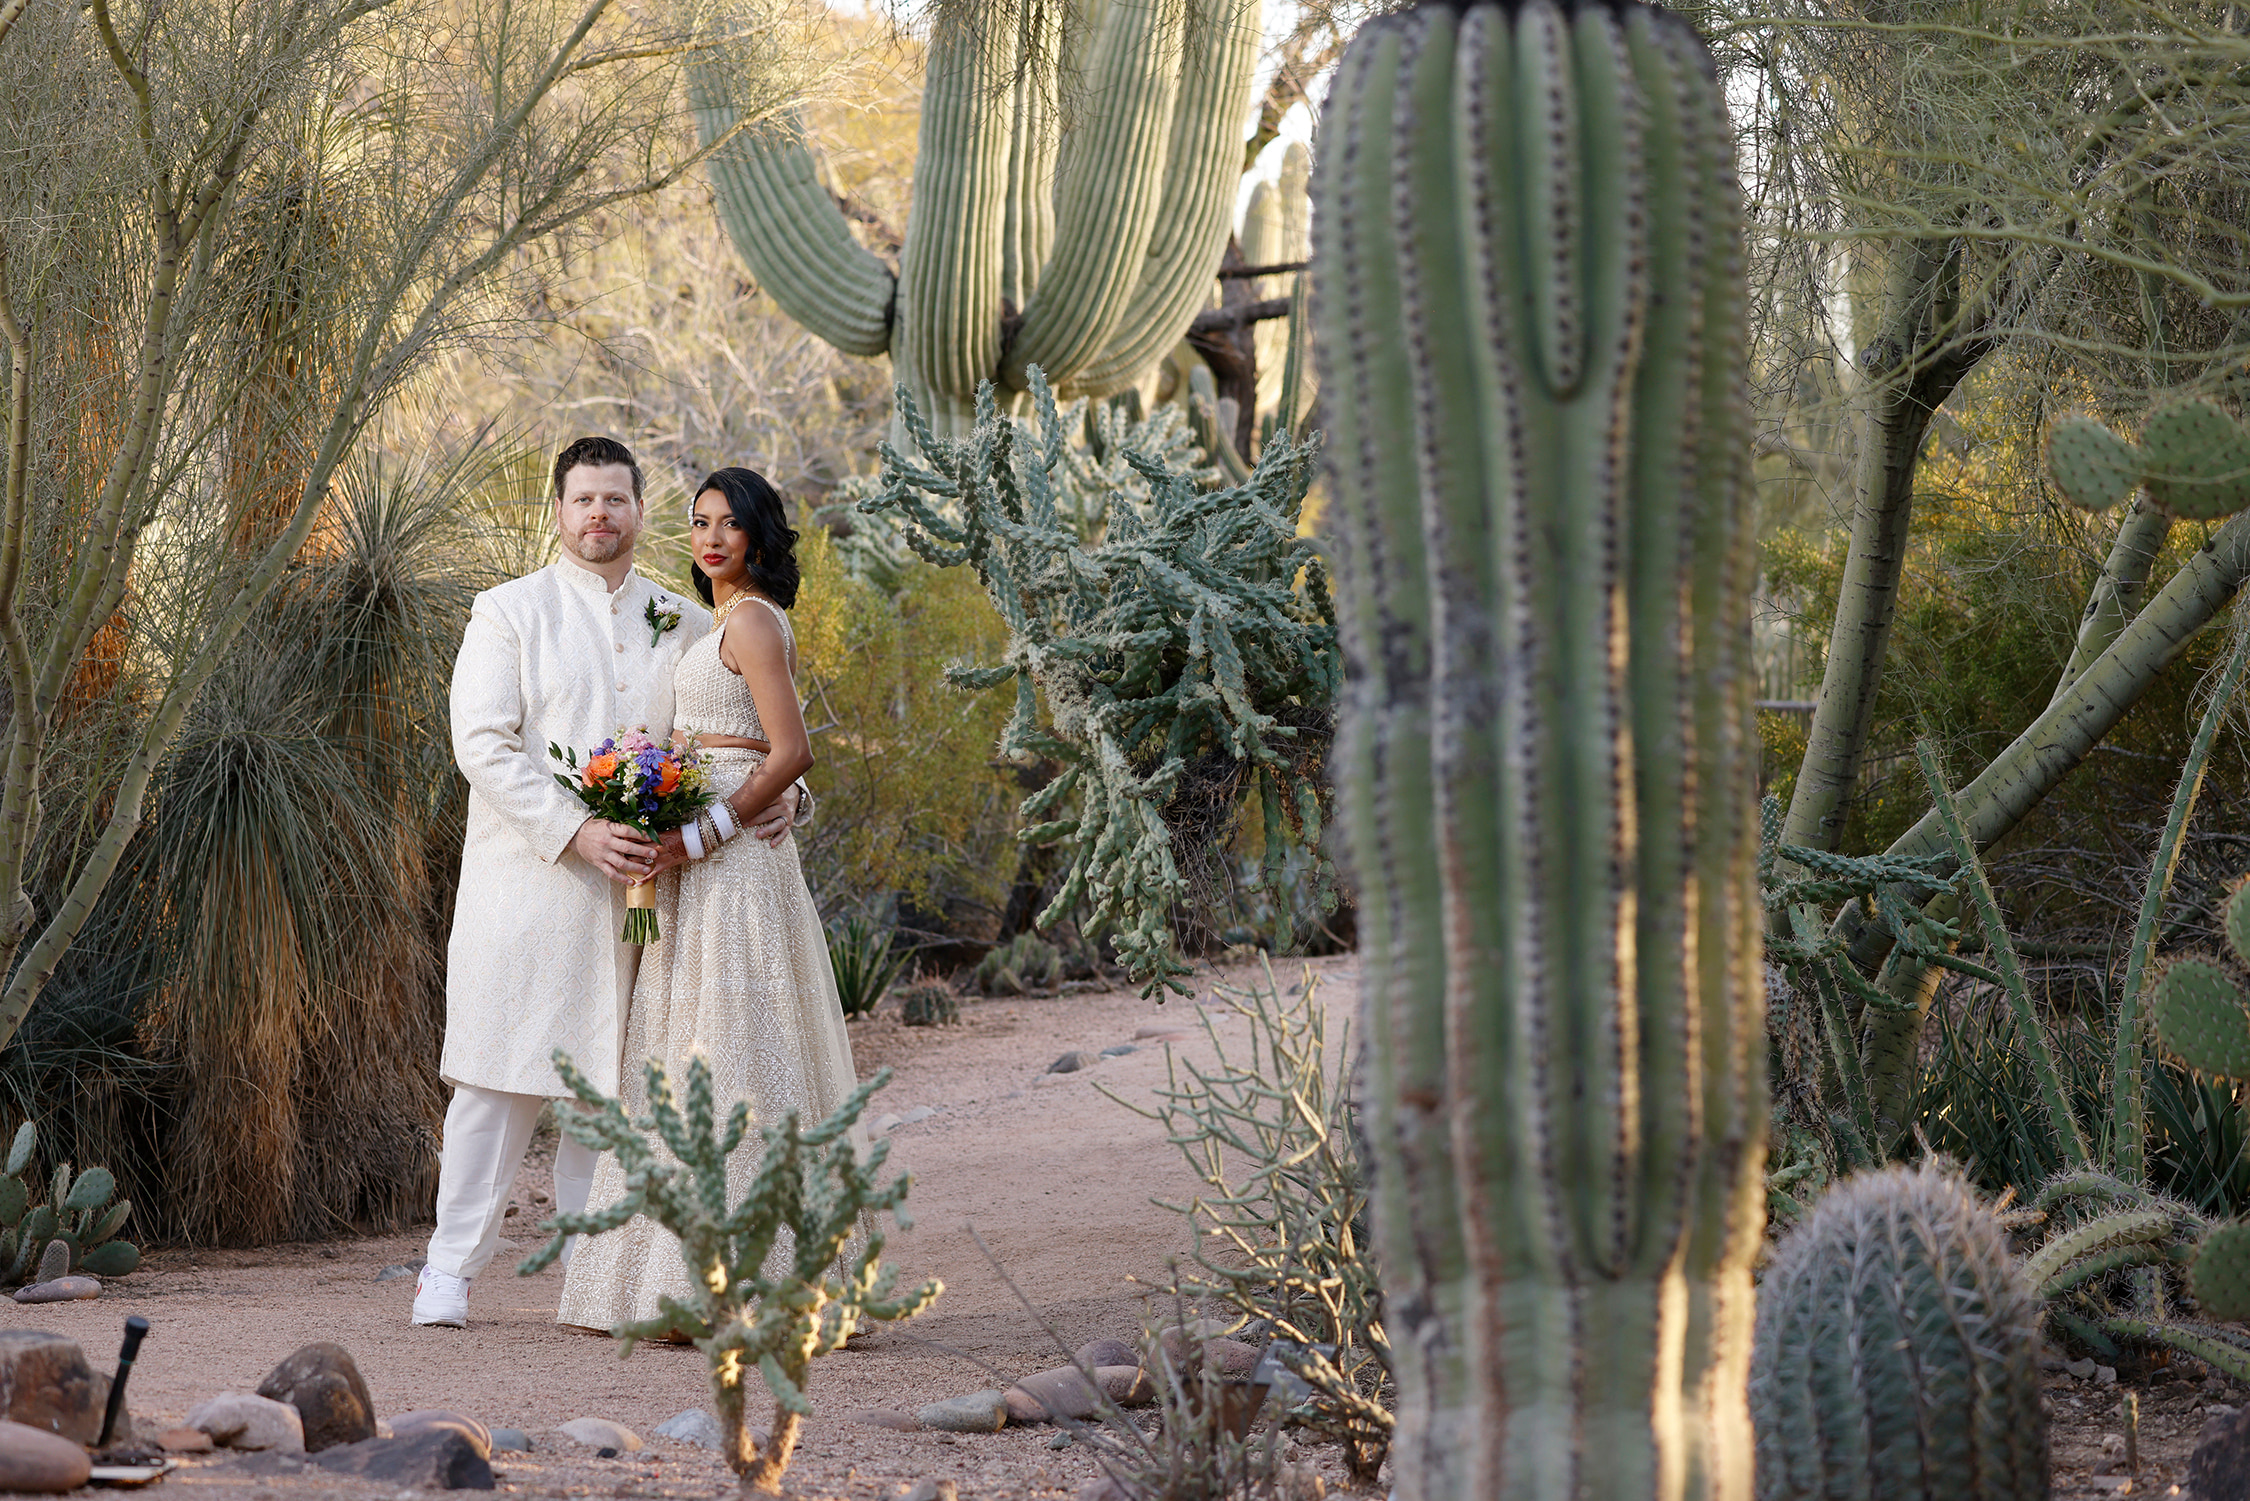 Luxury destination Indian wedding at the Desert Botanical Garden in Phoenix, Arizona